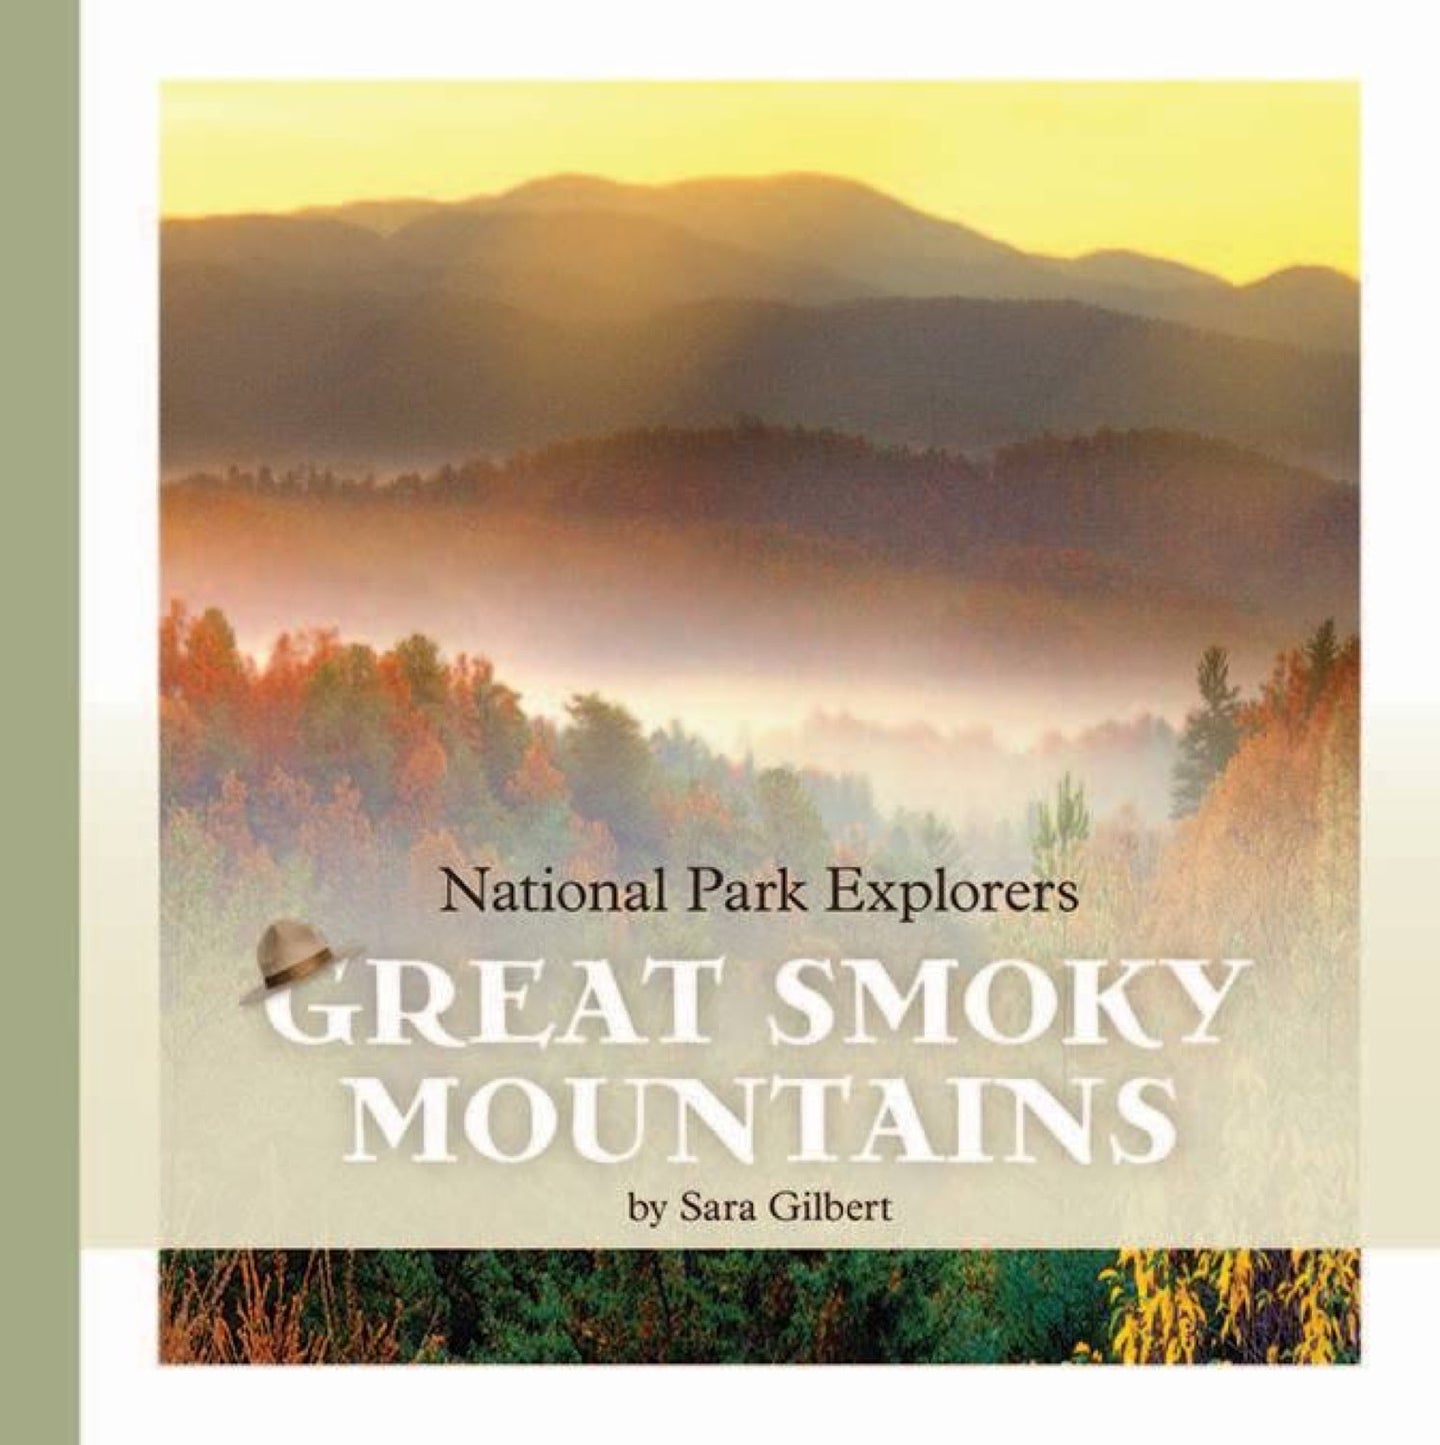 National Park Explorers: Great Smoky Mountains